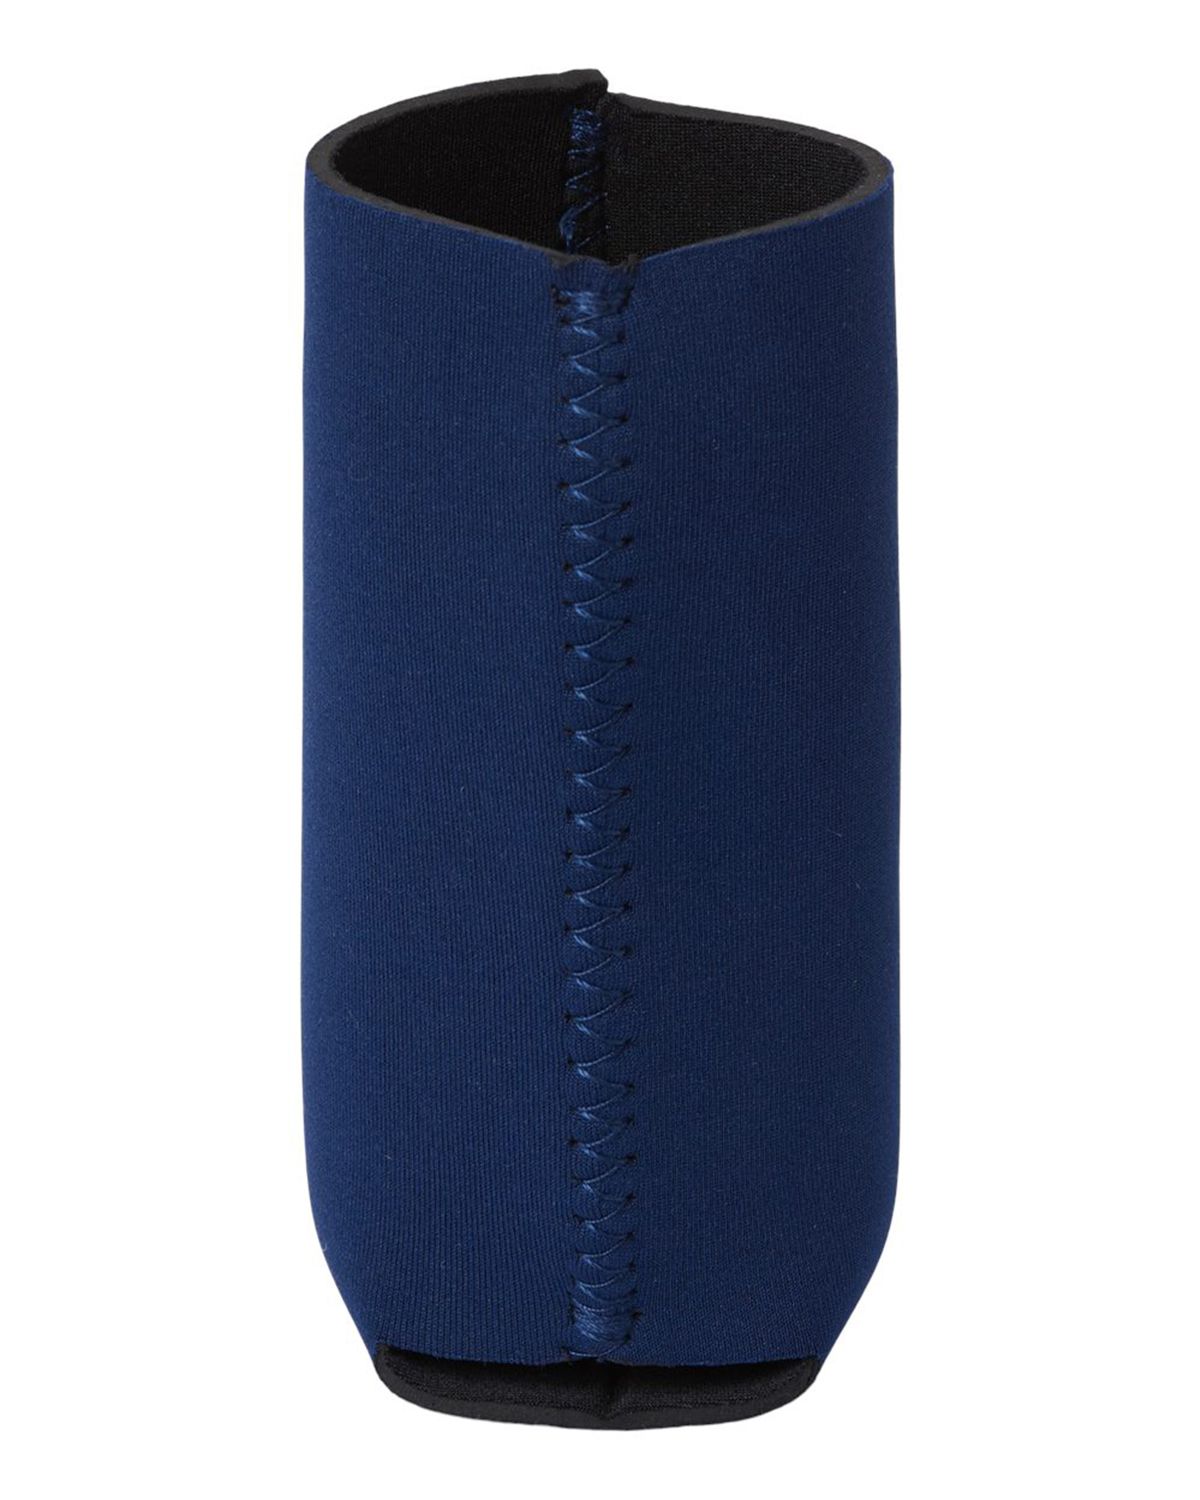 FT007SC Neoprene Slim Can and Bottle Holder-Liberty Bags